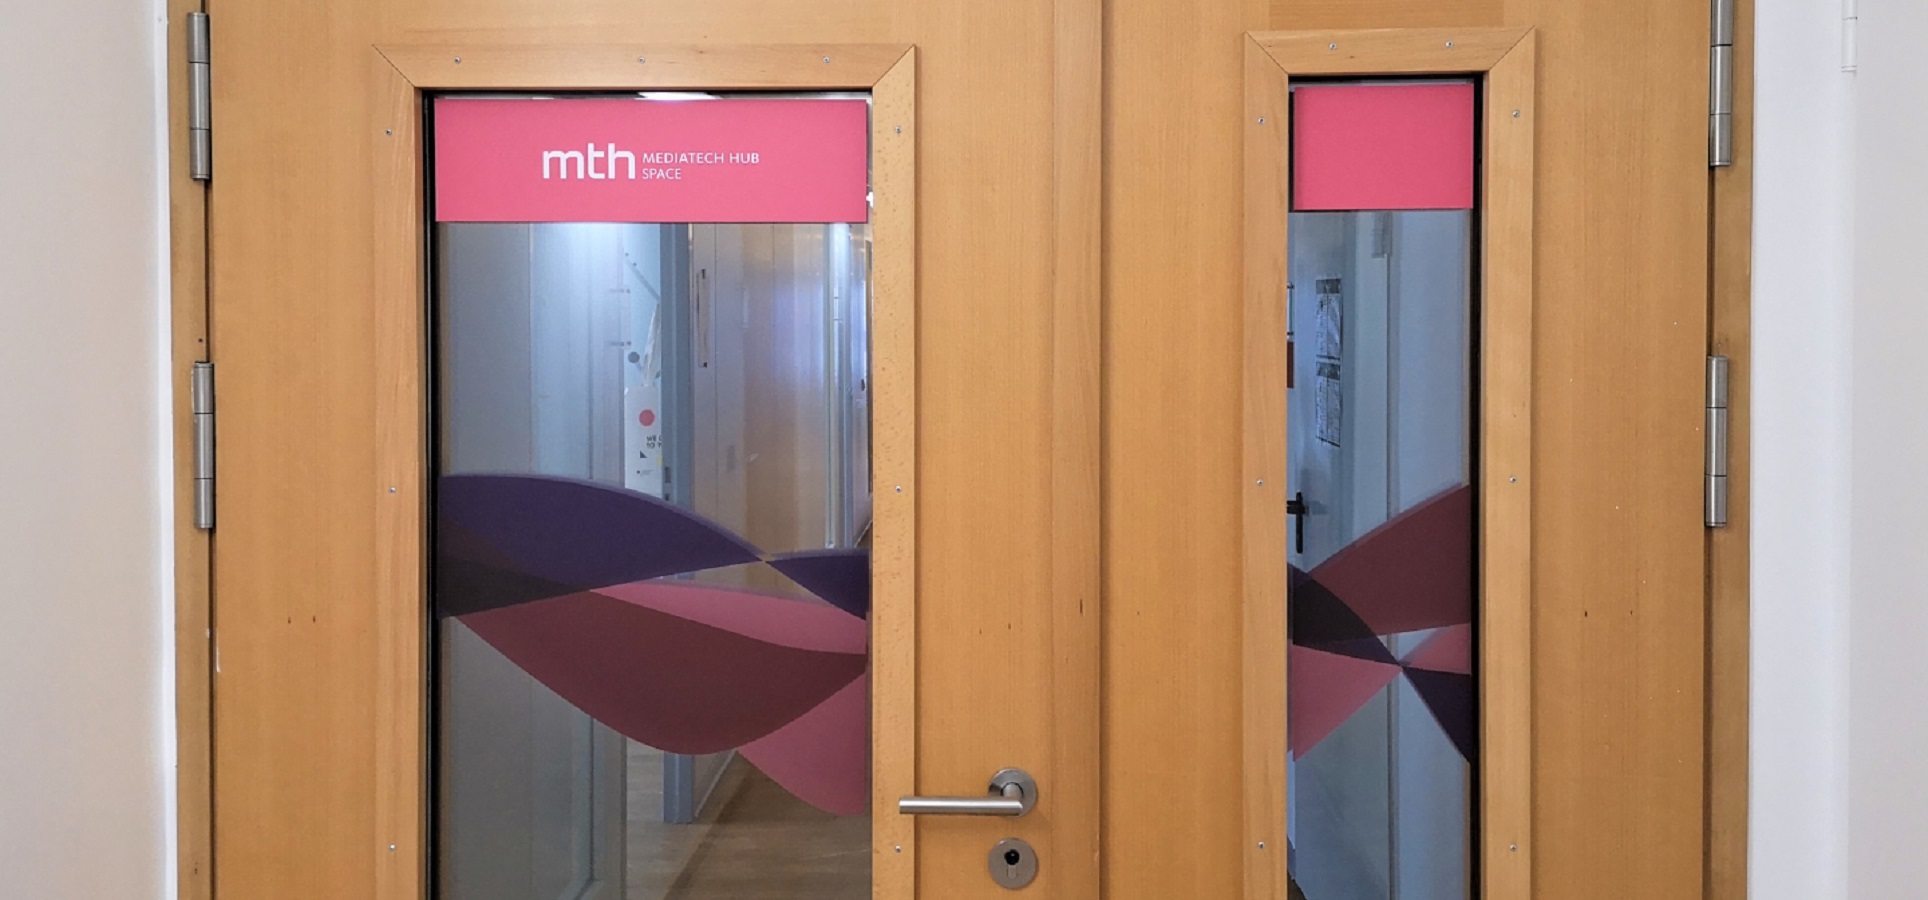 Eingang zum MediaTech Hub Coworking Space